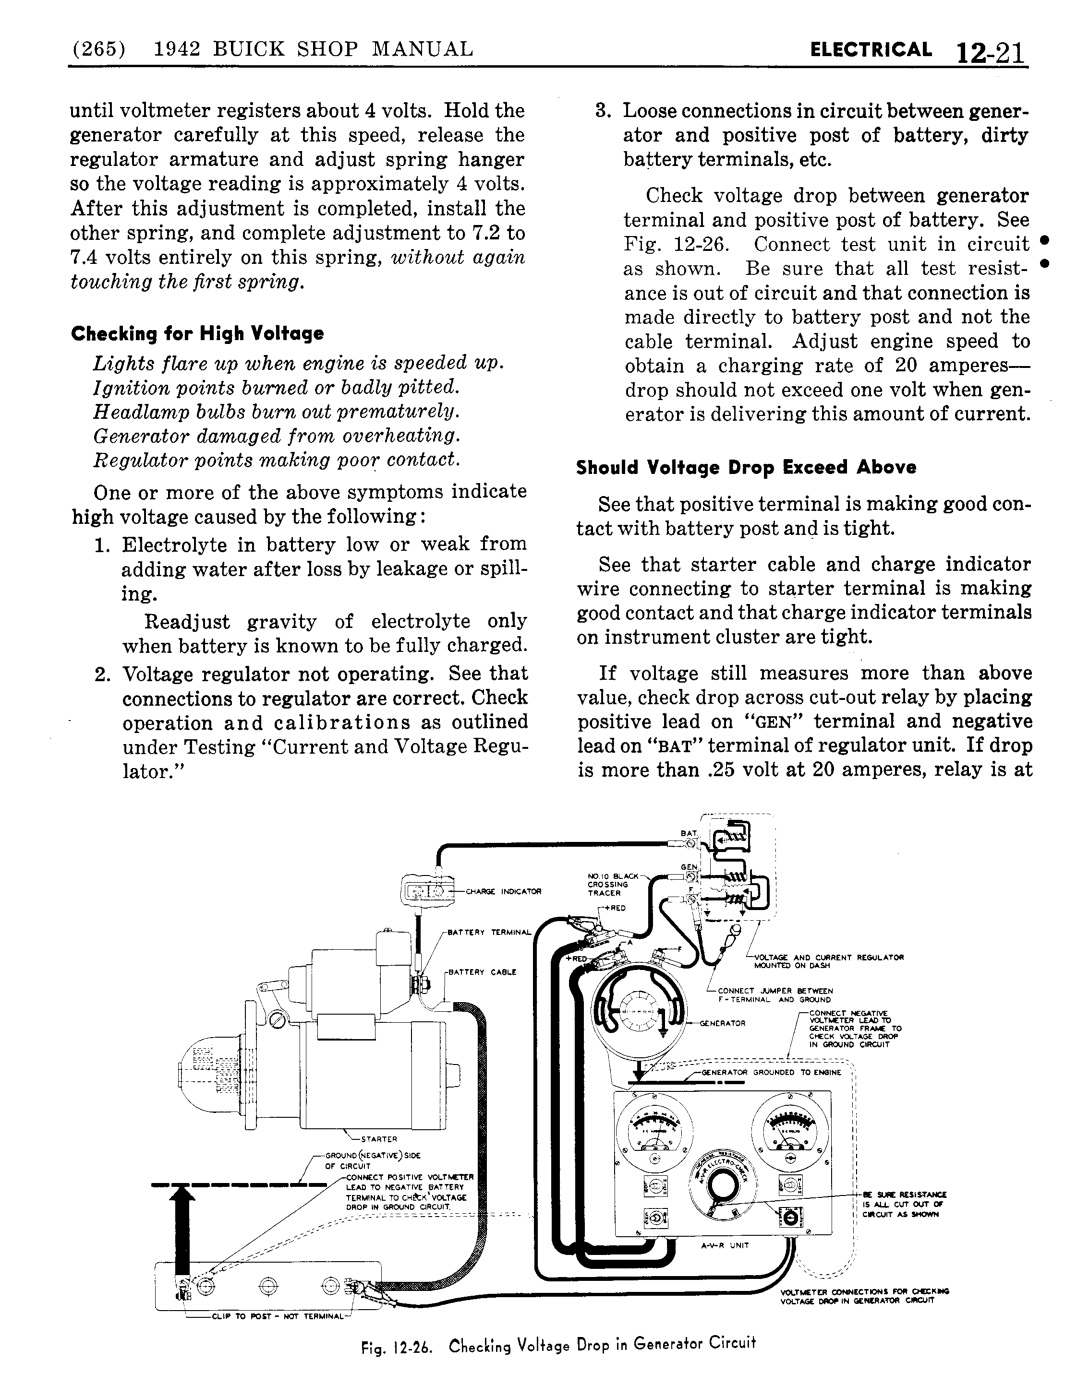 n_13 1942 Buick Shop Manual - Electrical System-021-021.jpg